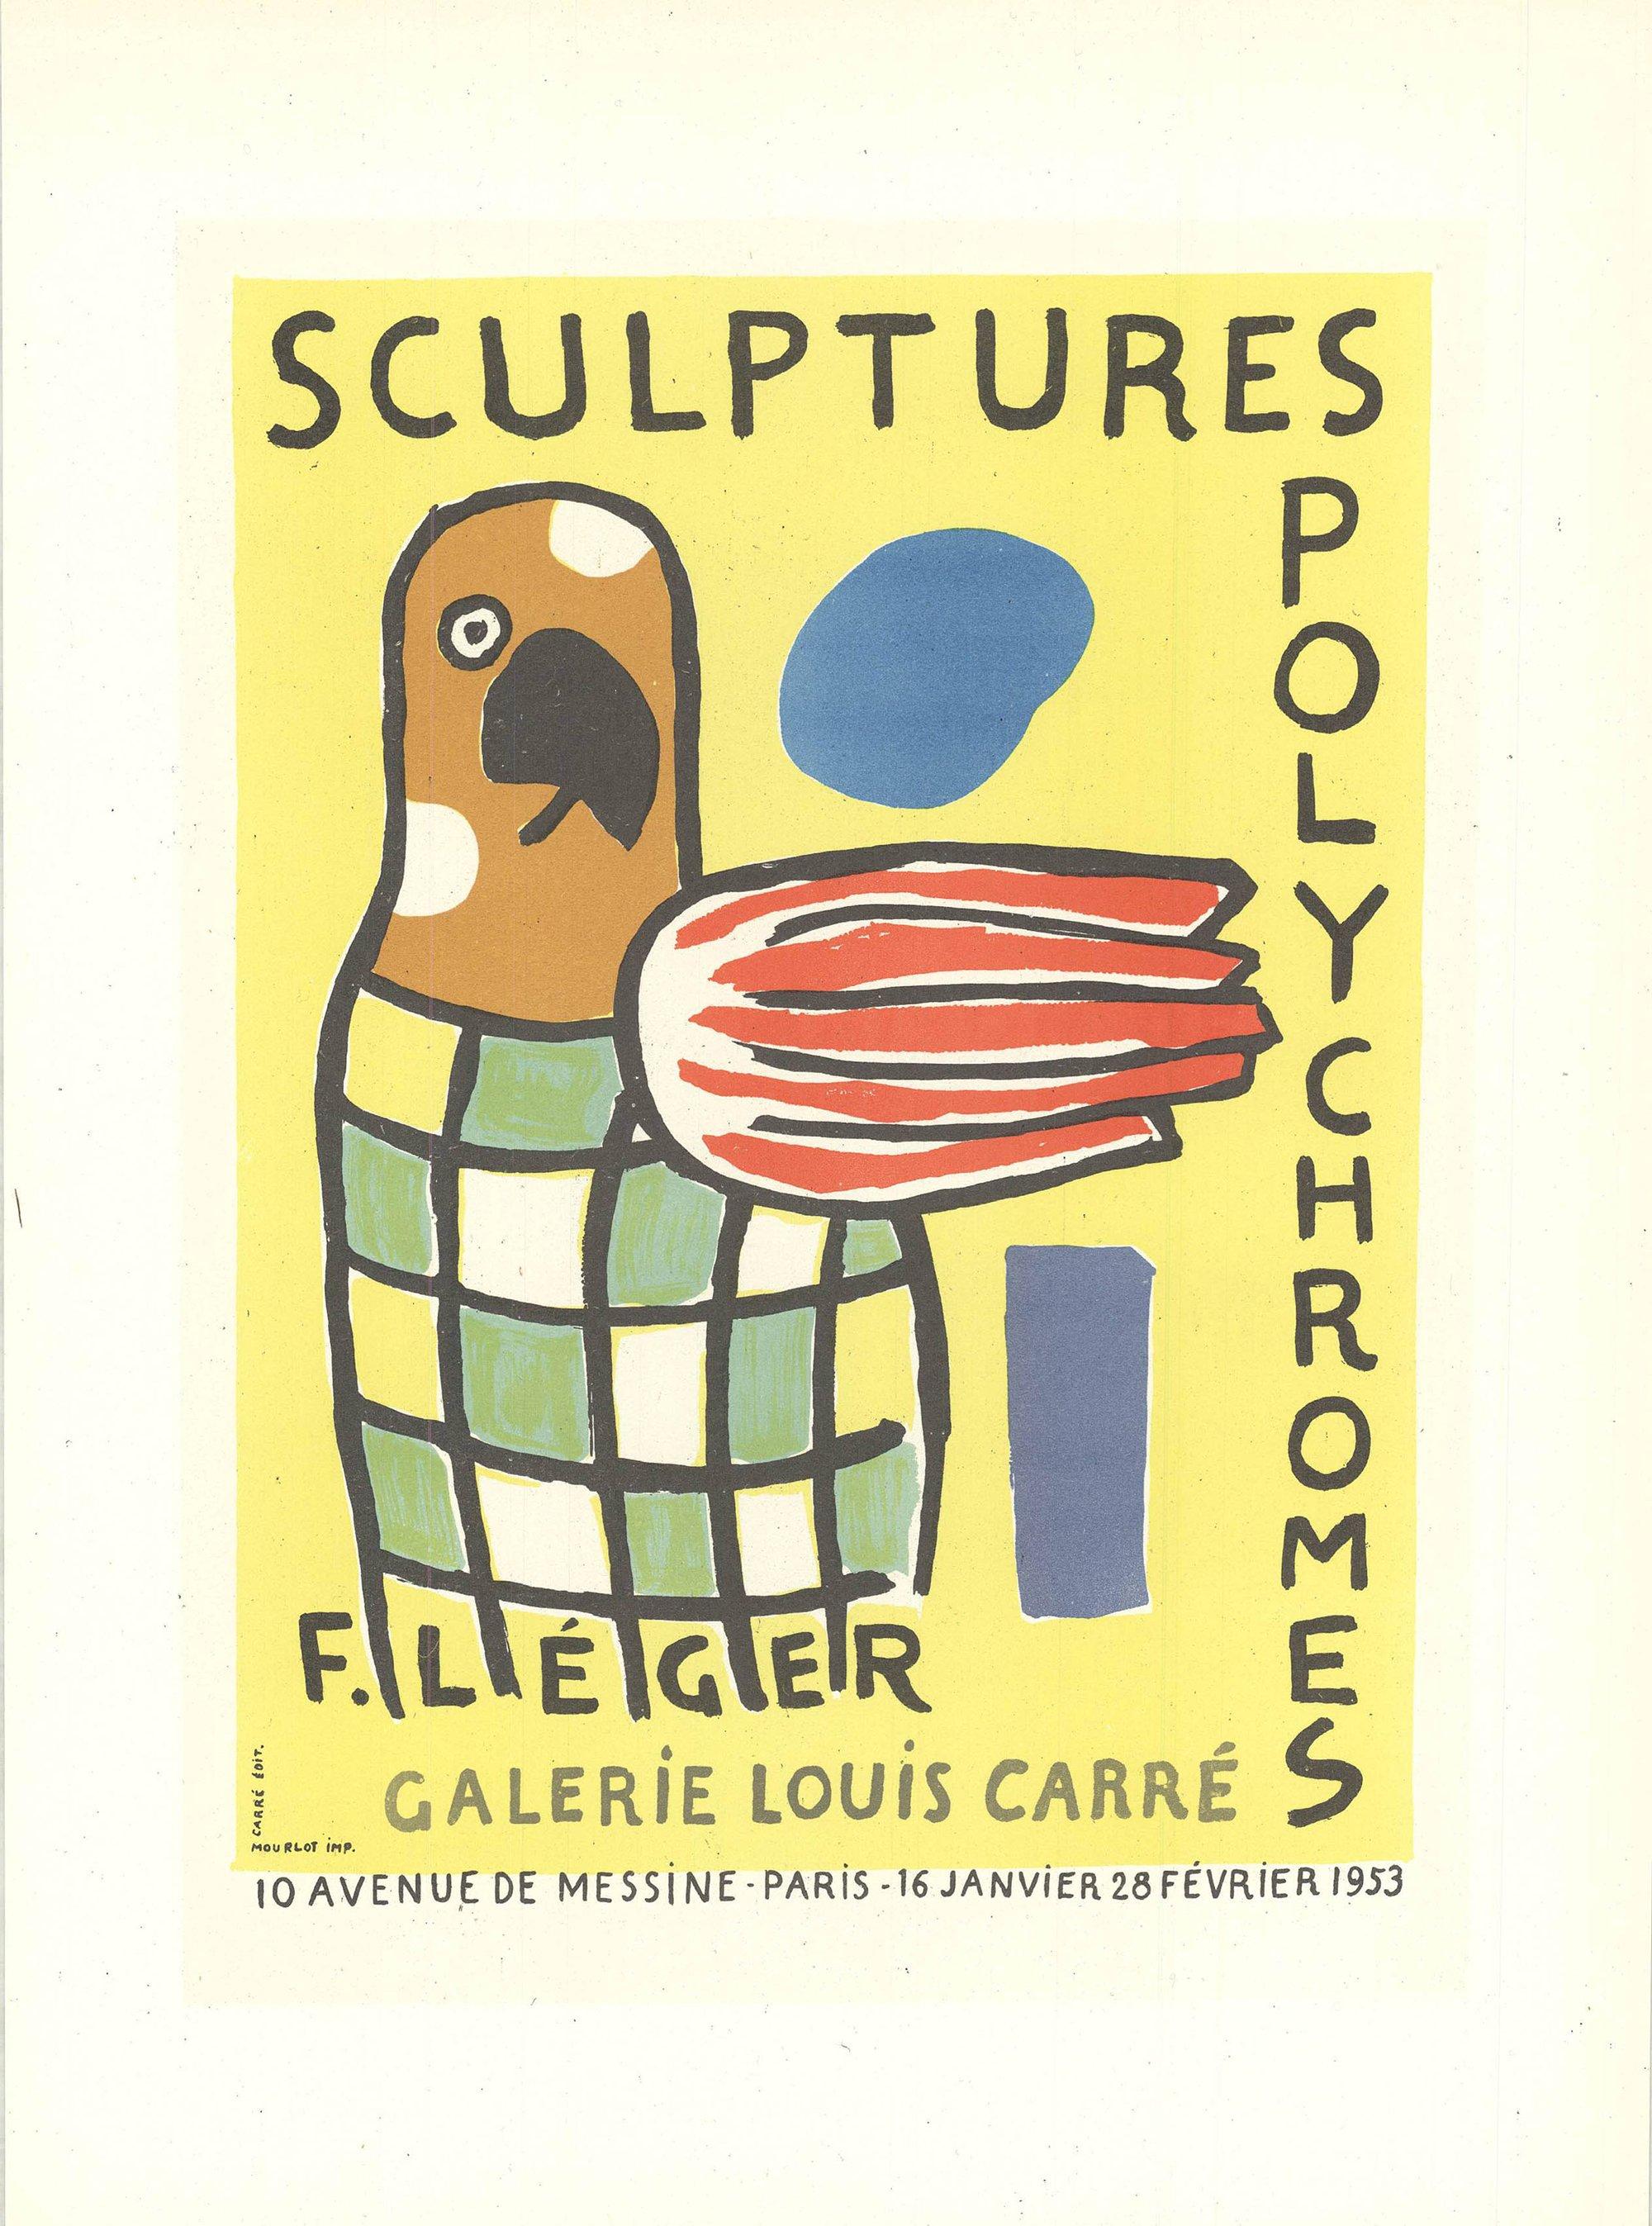 1959 After Fernand Leger 'Sculptures Polychromes Galerie Louis Carre' Modernism - Print by Fernand Léger